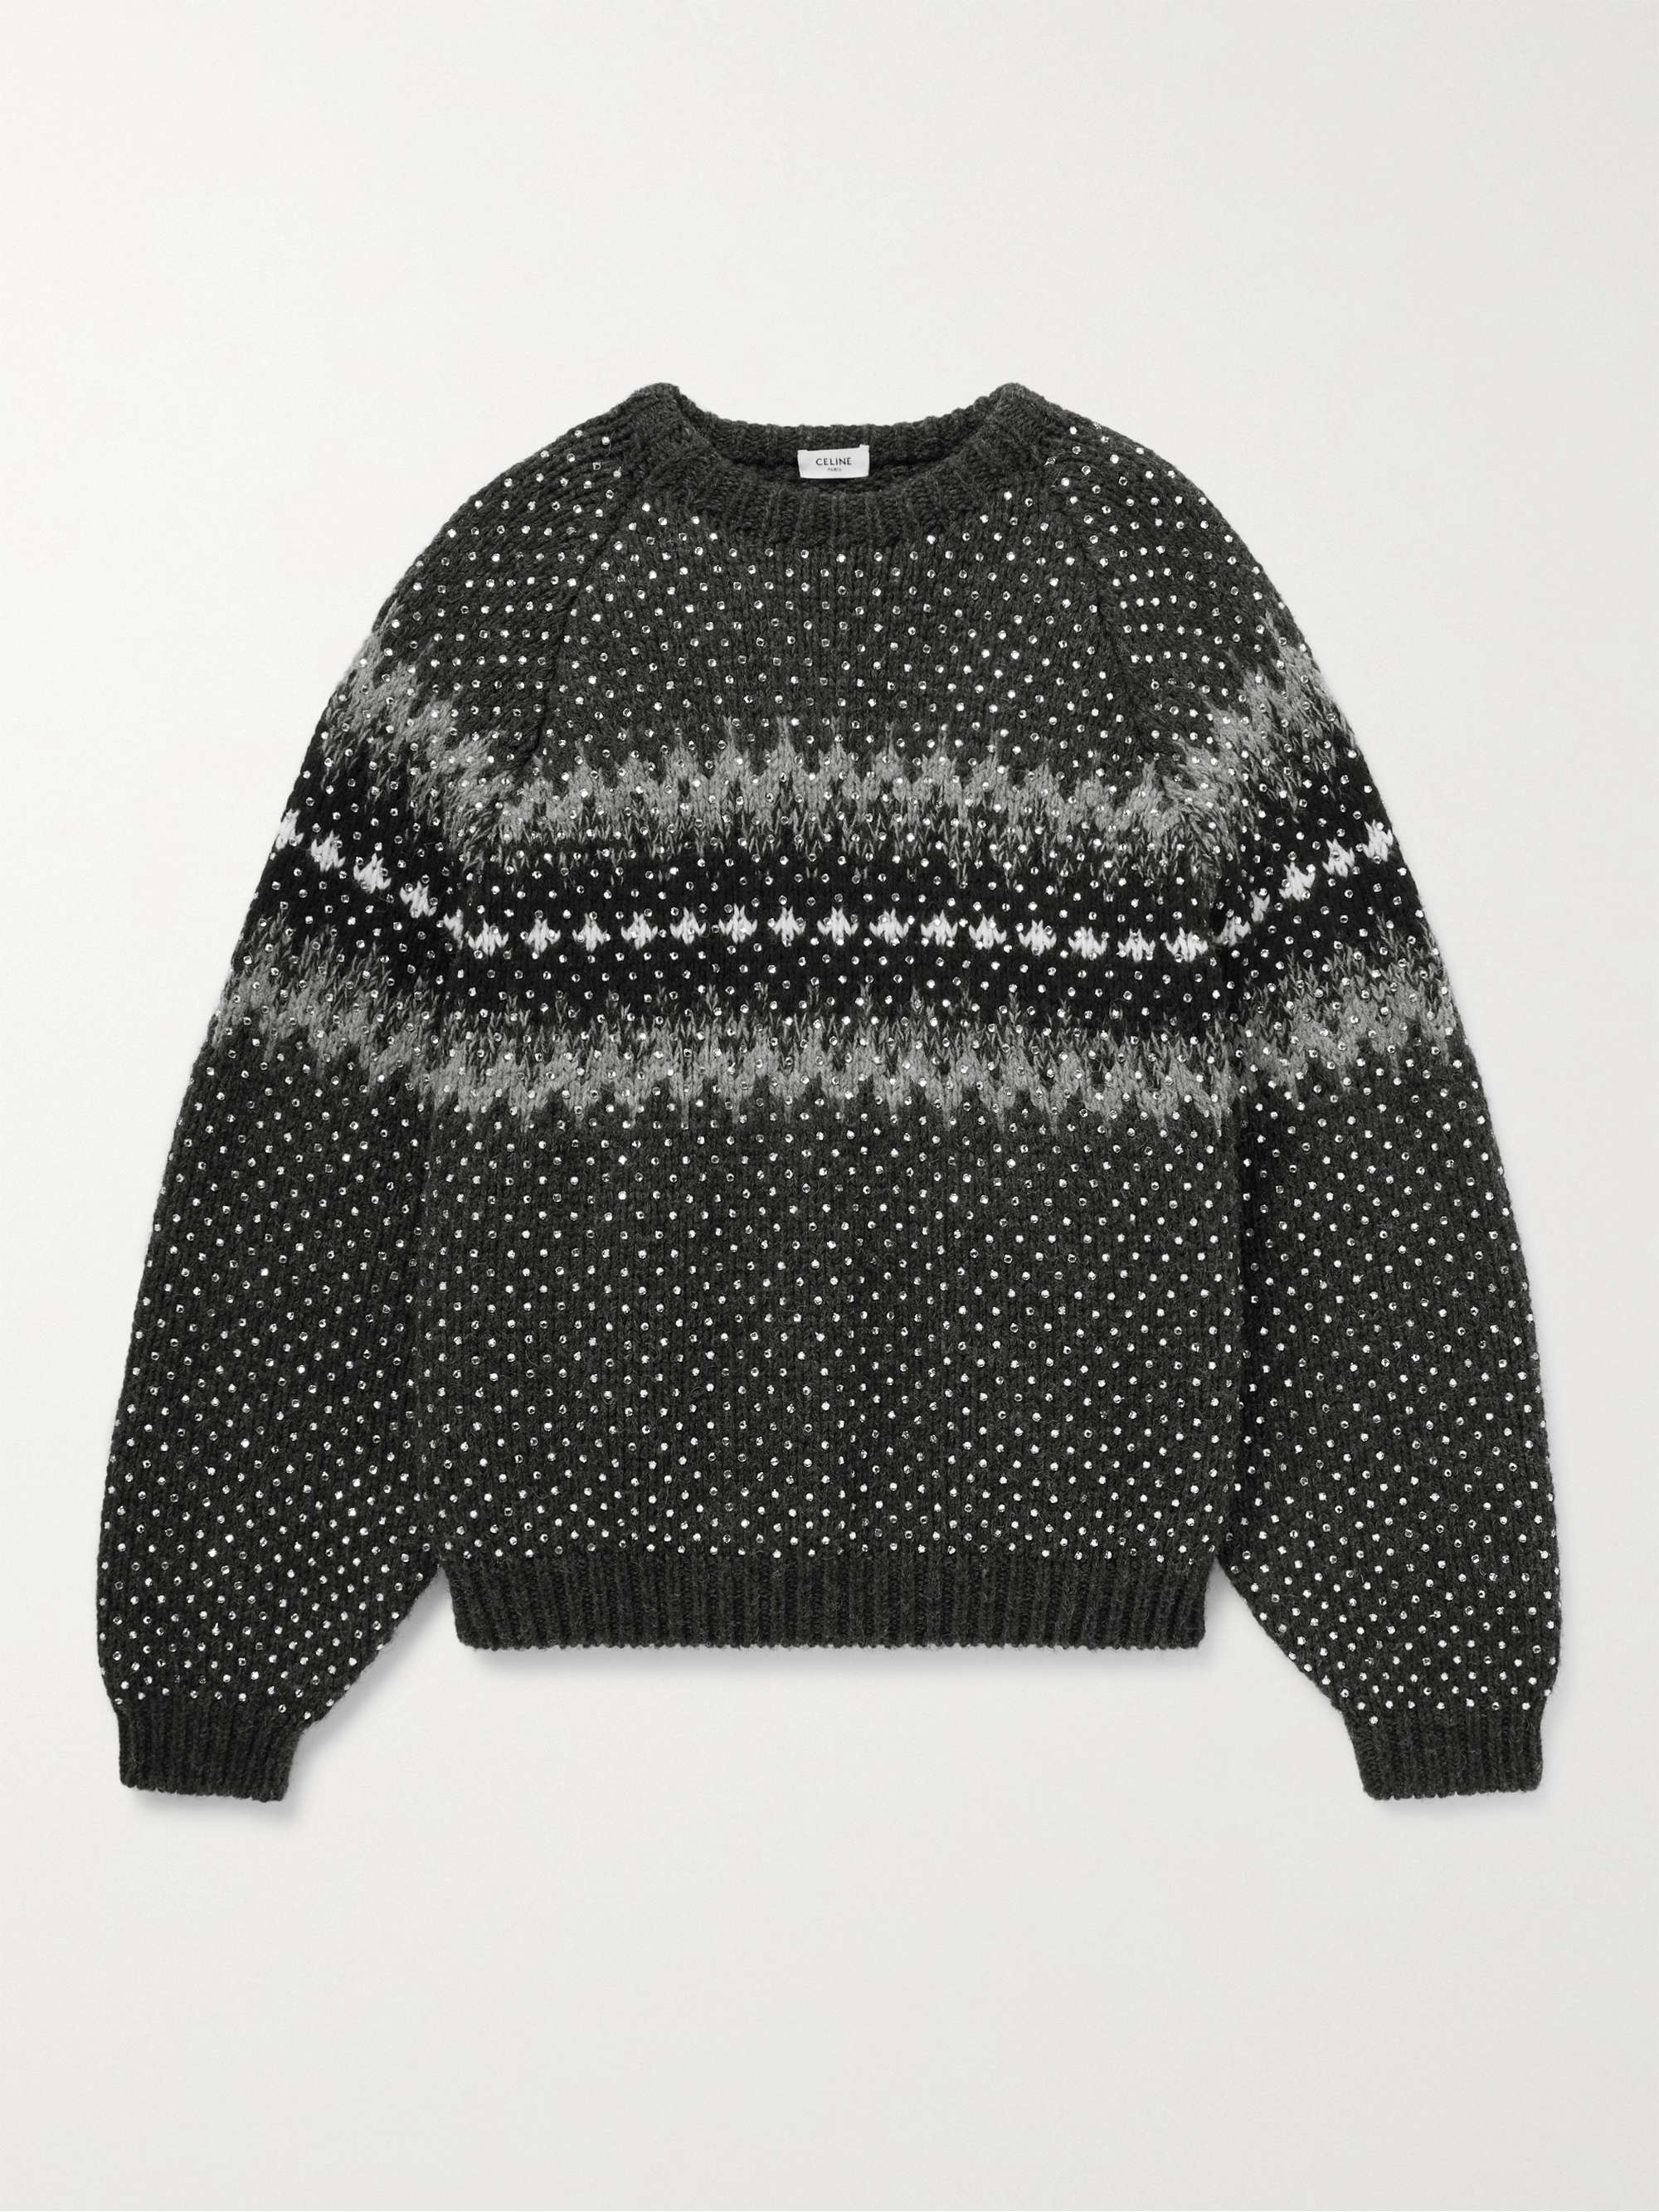 CELINE HOMME Oversized Rhinestone-Embellished Fair Isle Wool Sweater